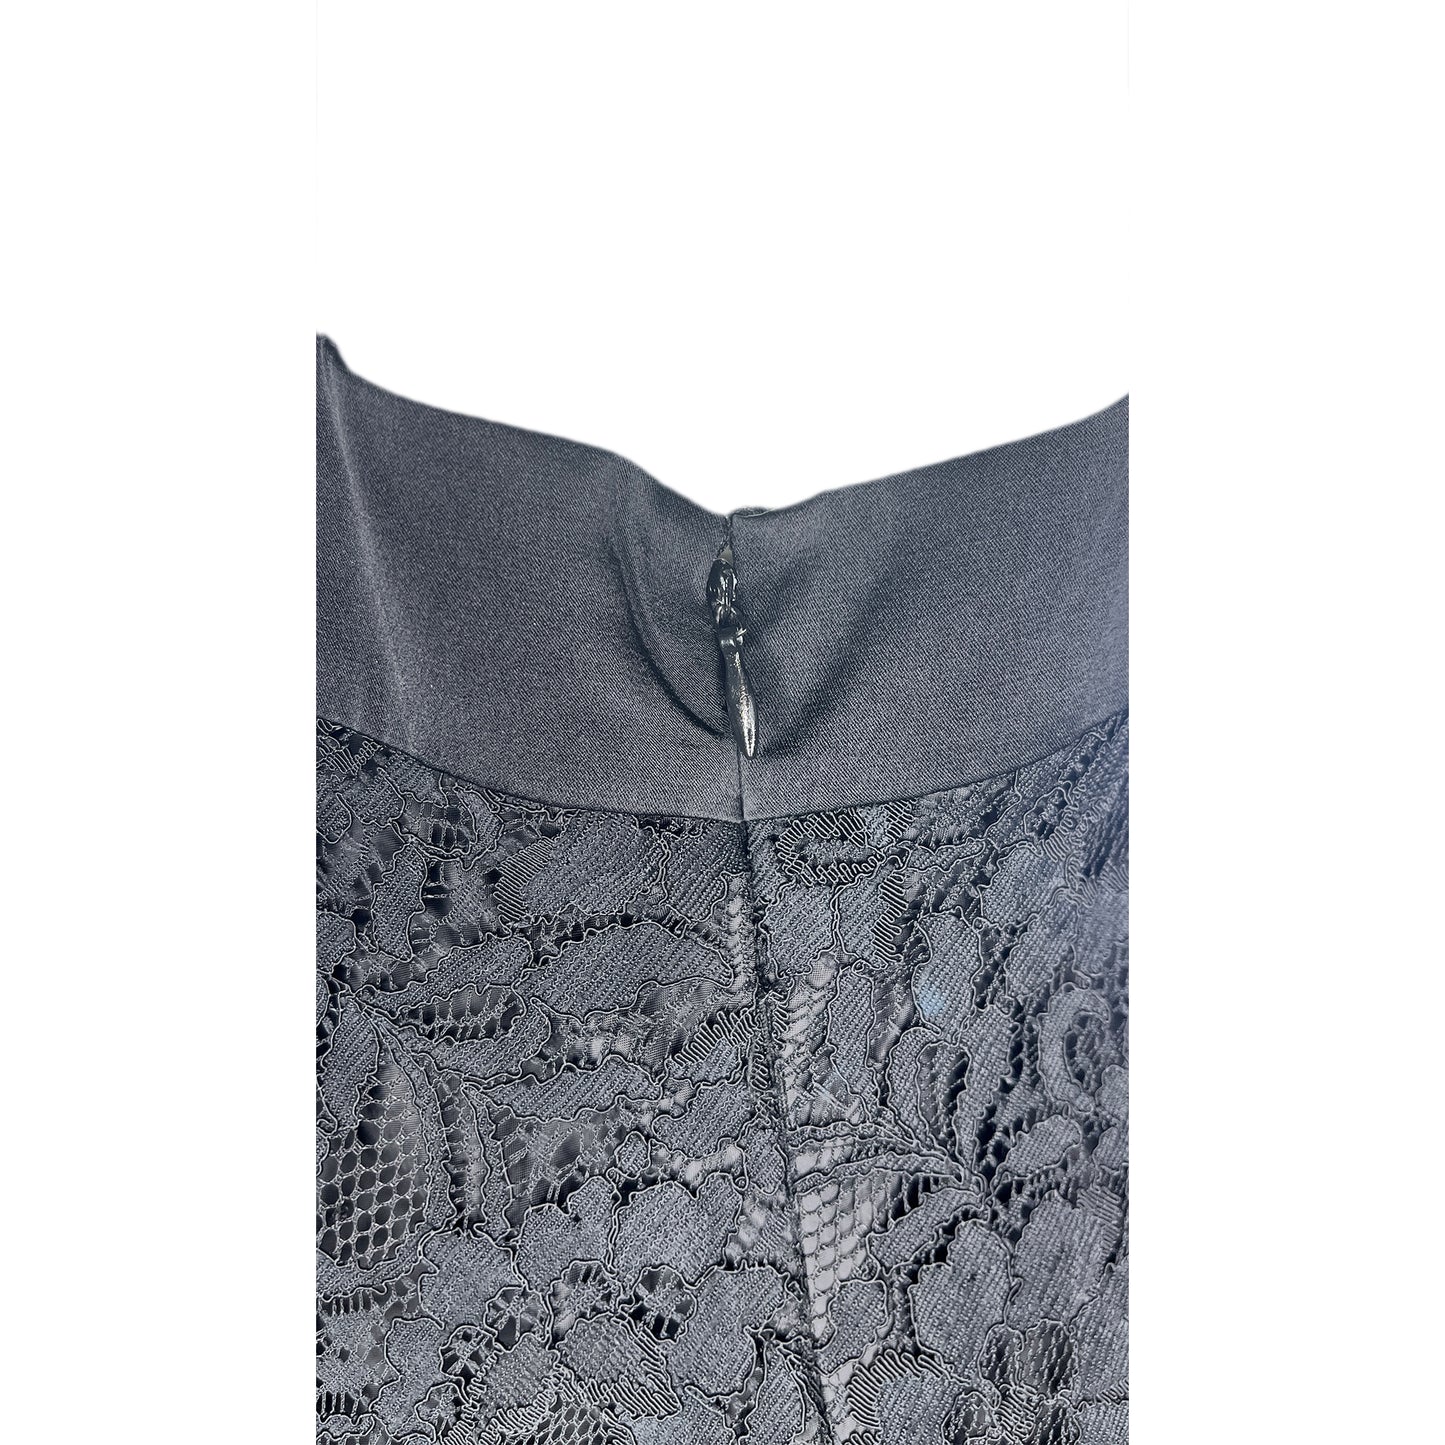 Calvin Klein Dress Sleeveless Floor-Length Lace Black Size 6 SKU 000138-6